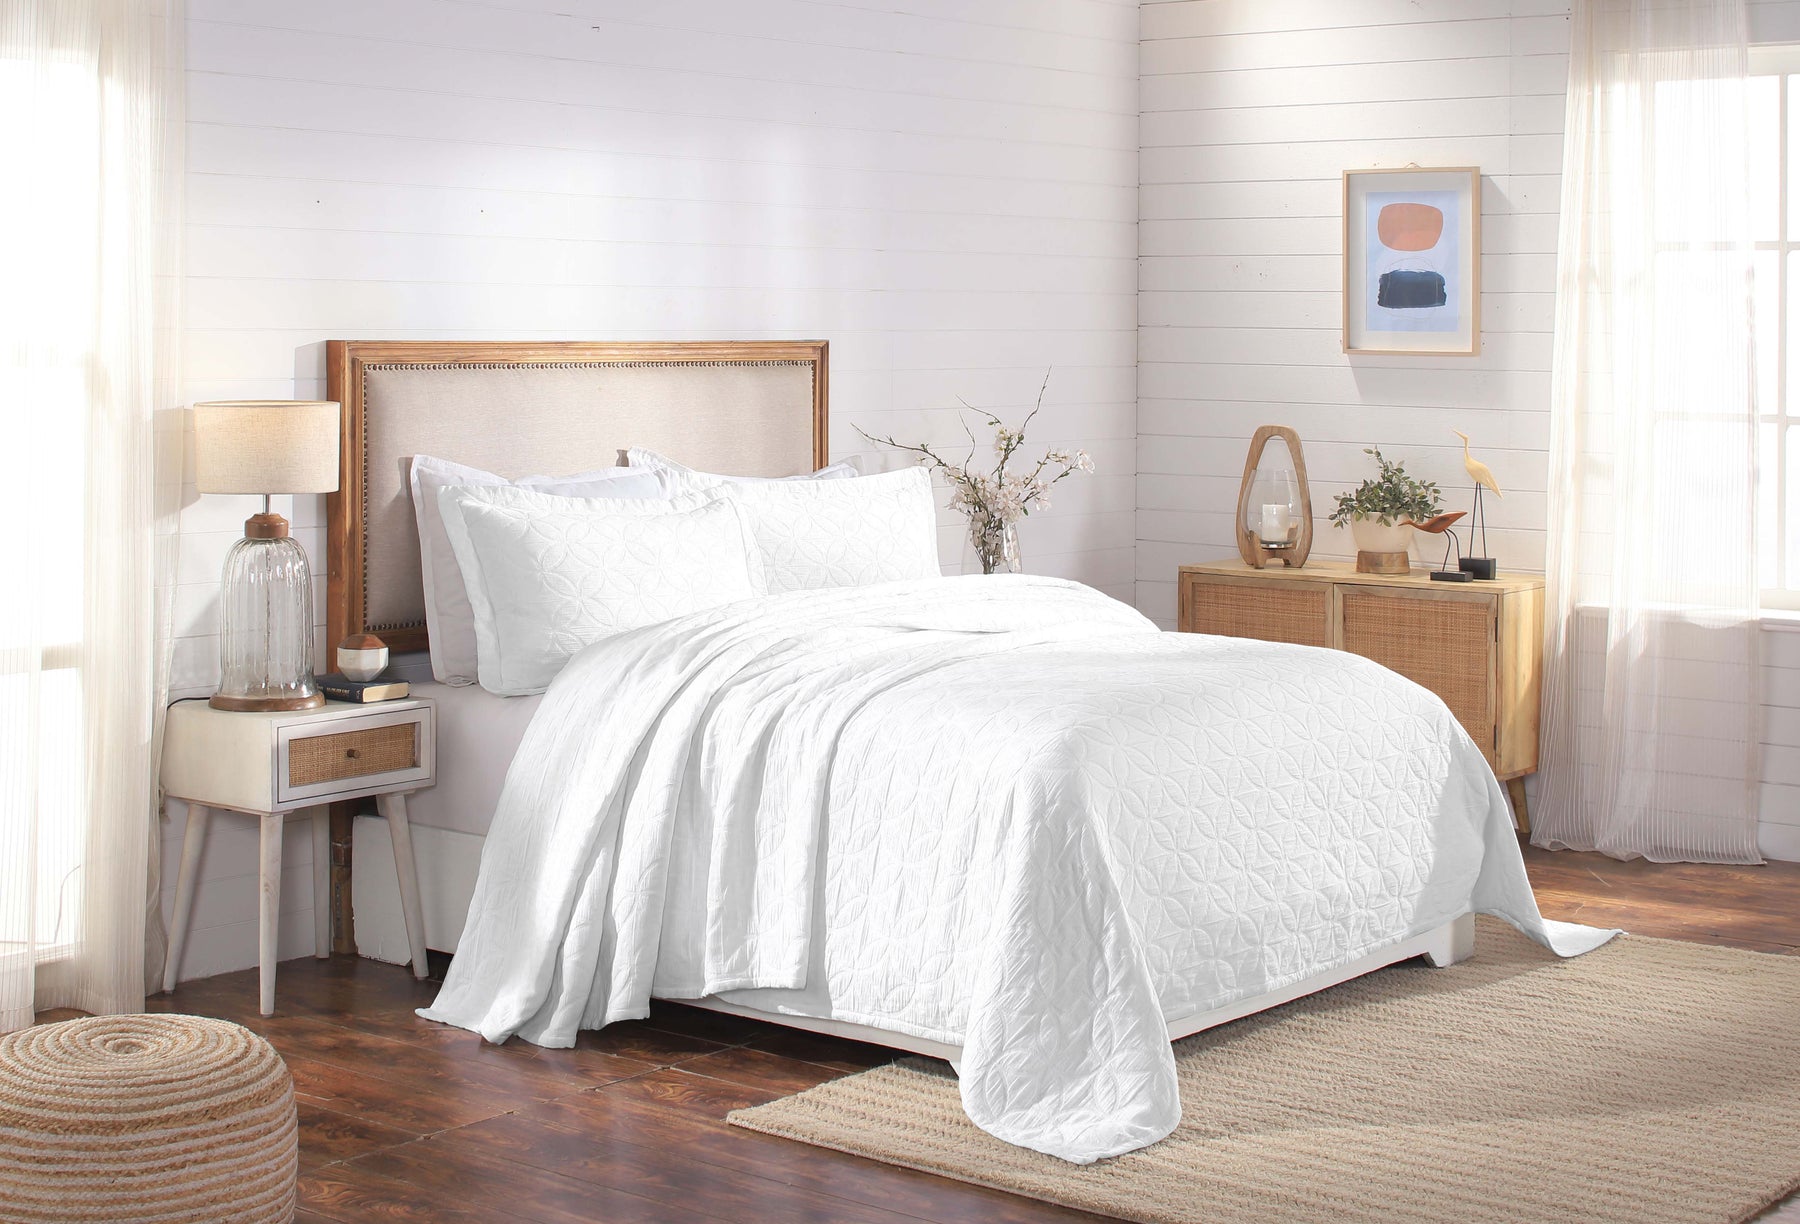 Serenity Cotton Matelasse Weave Jacquard Celtic Circle Bedspread Set - White